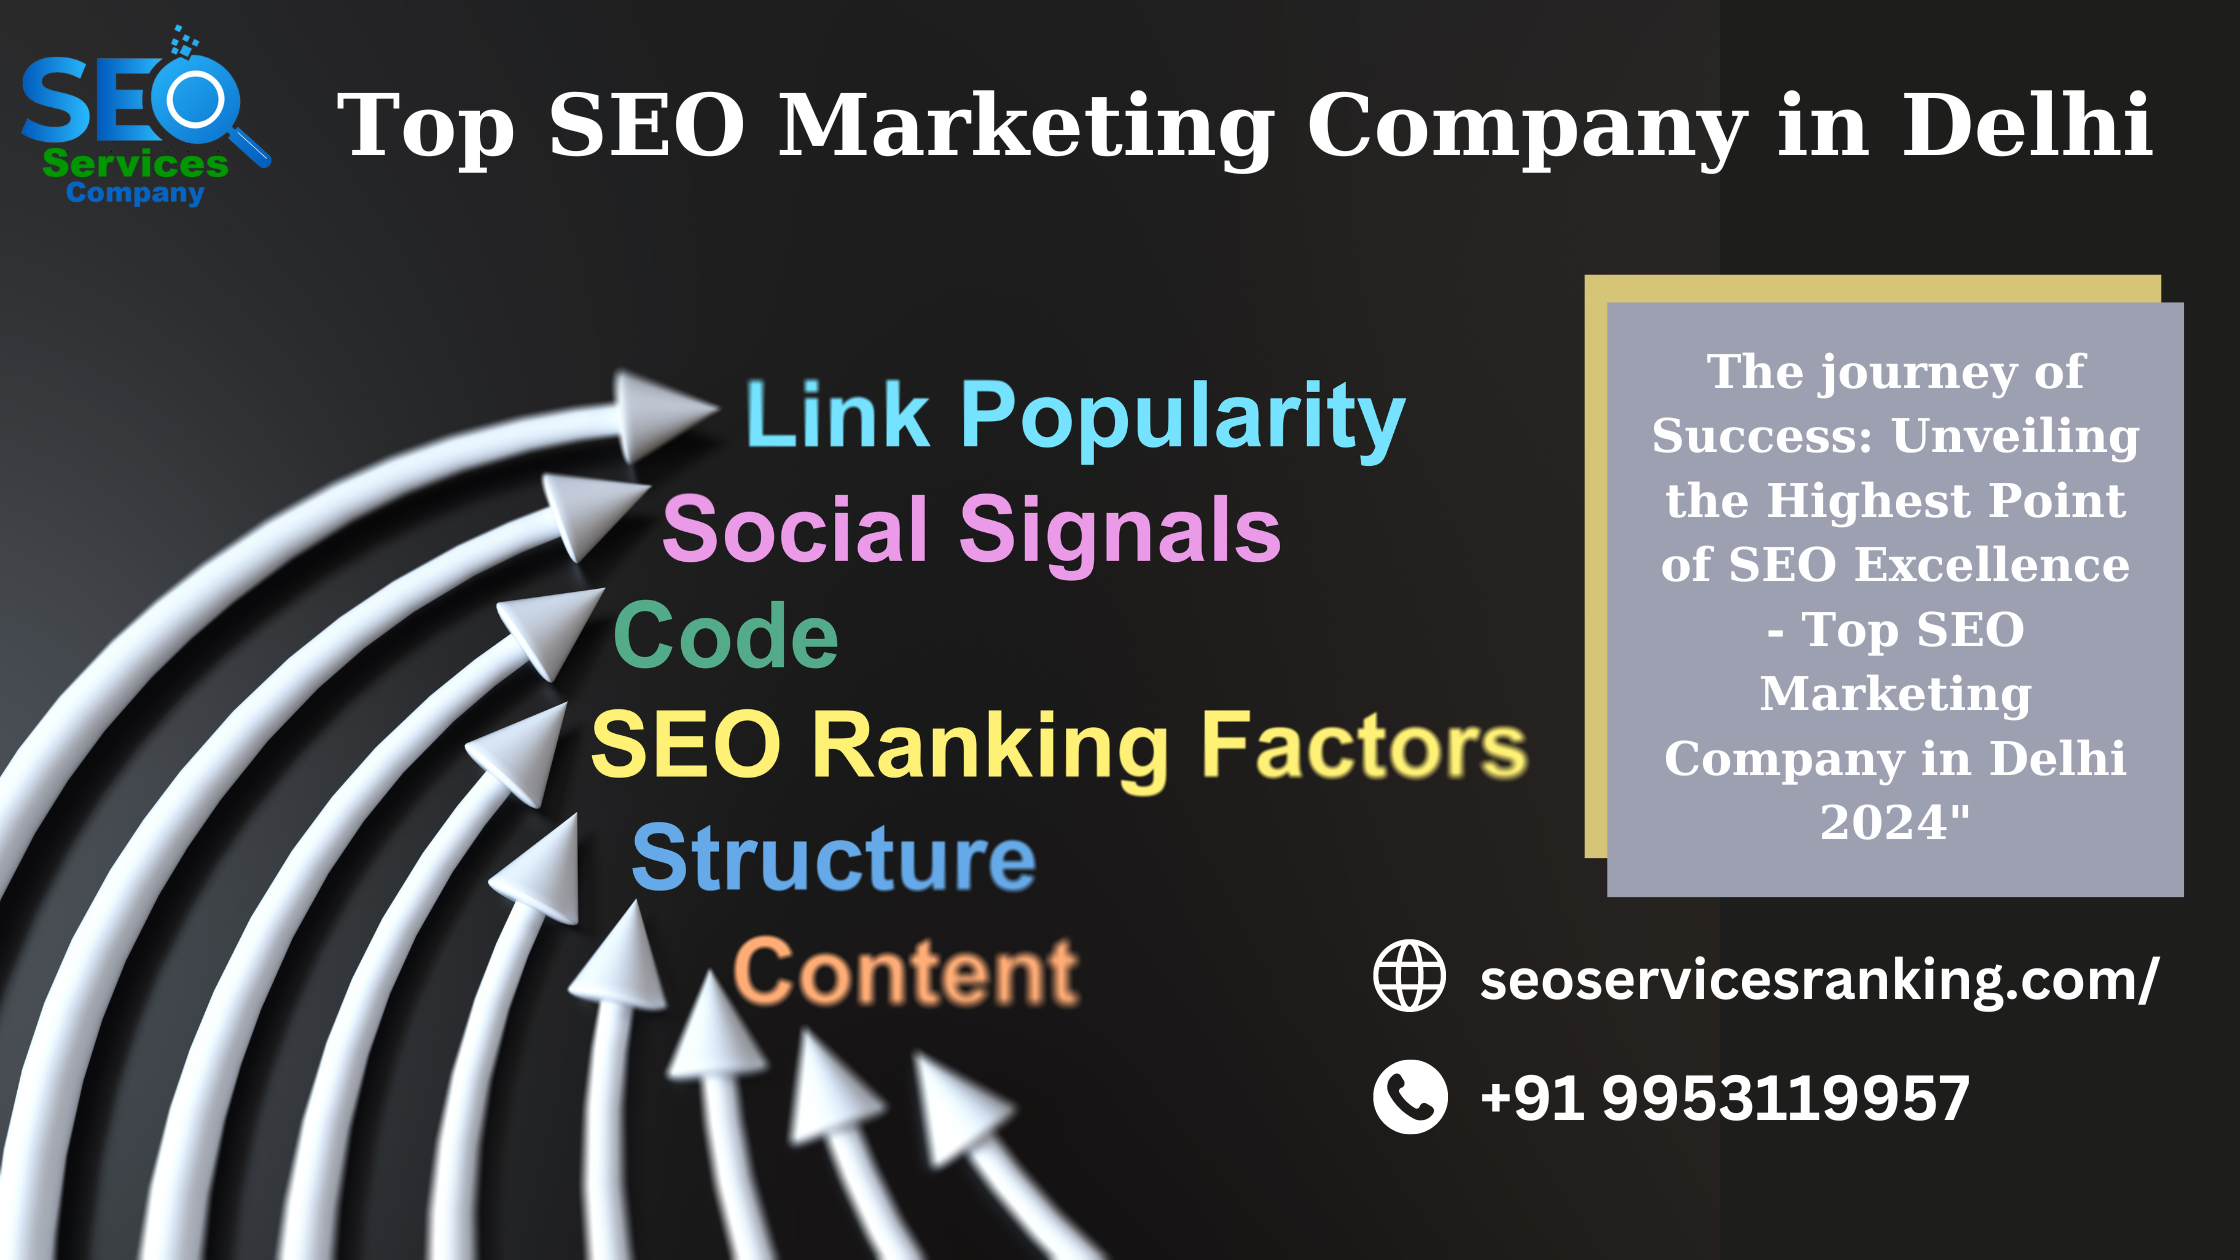 Top Best SEO Marketing Company in Delhi